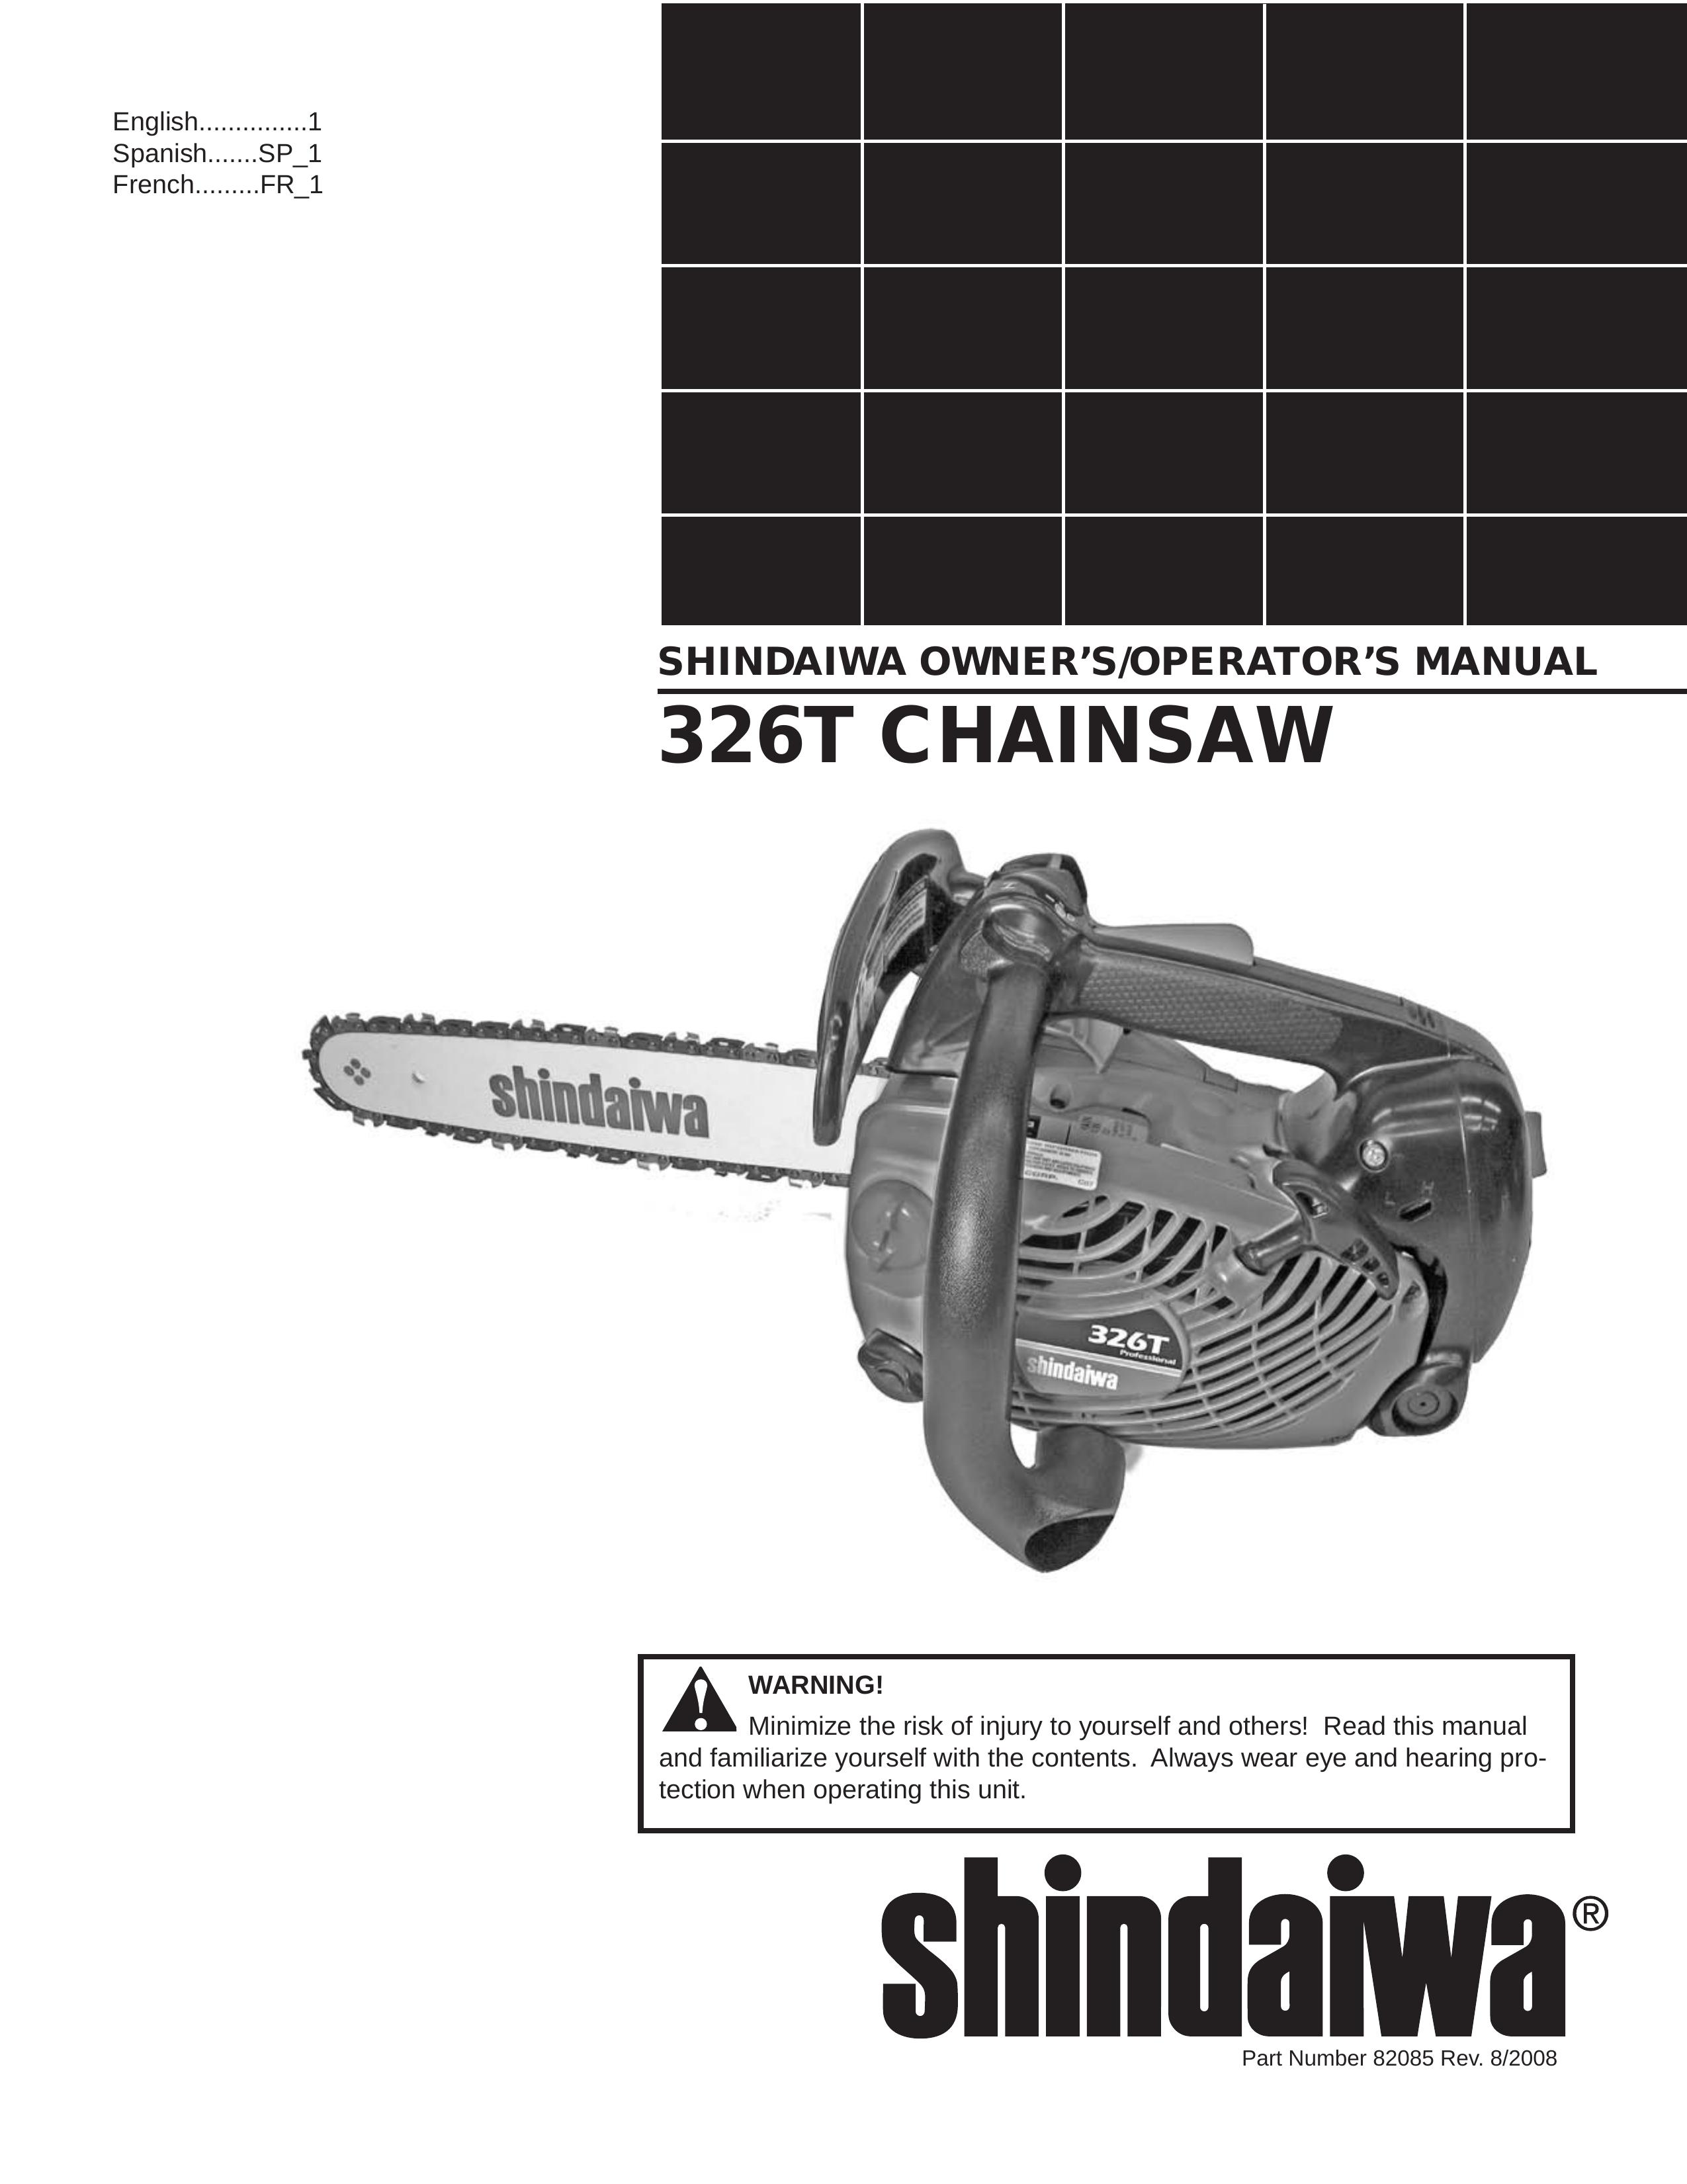 Shindaiwa 326T Chainsaw User Manual